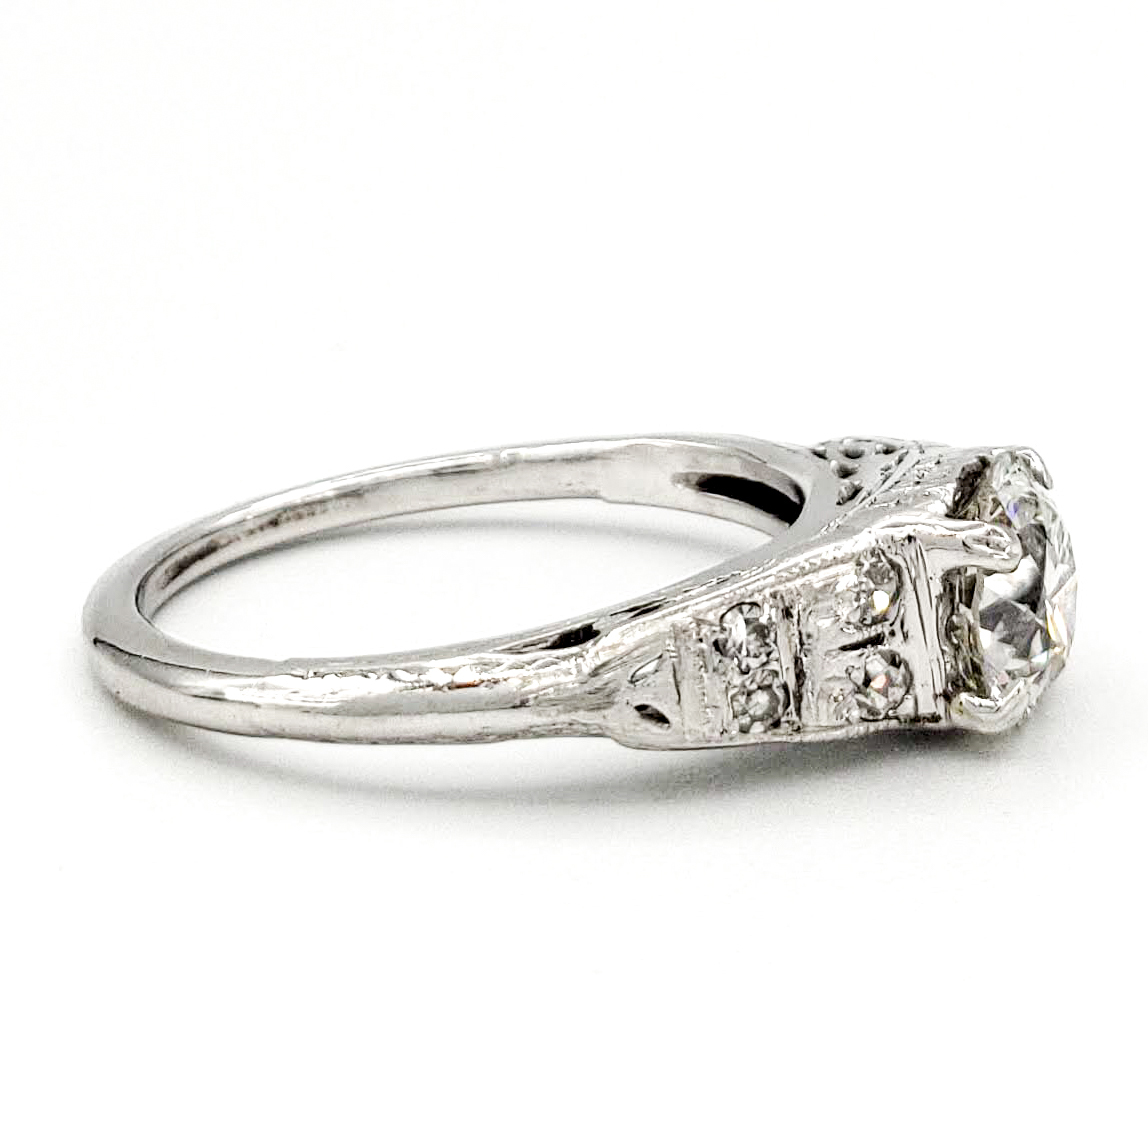 vintage-18-karat-gold-engagement-ring-with-0-71-carat-old-european-cut-diamond-egl-i-si1